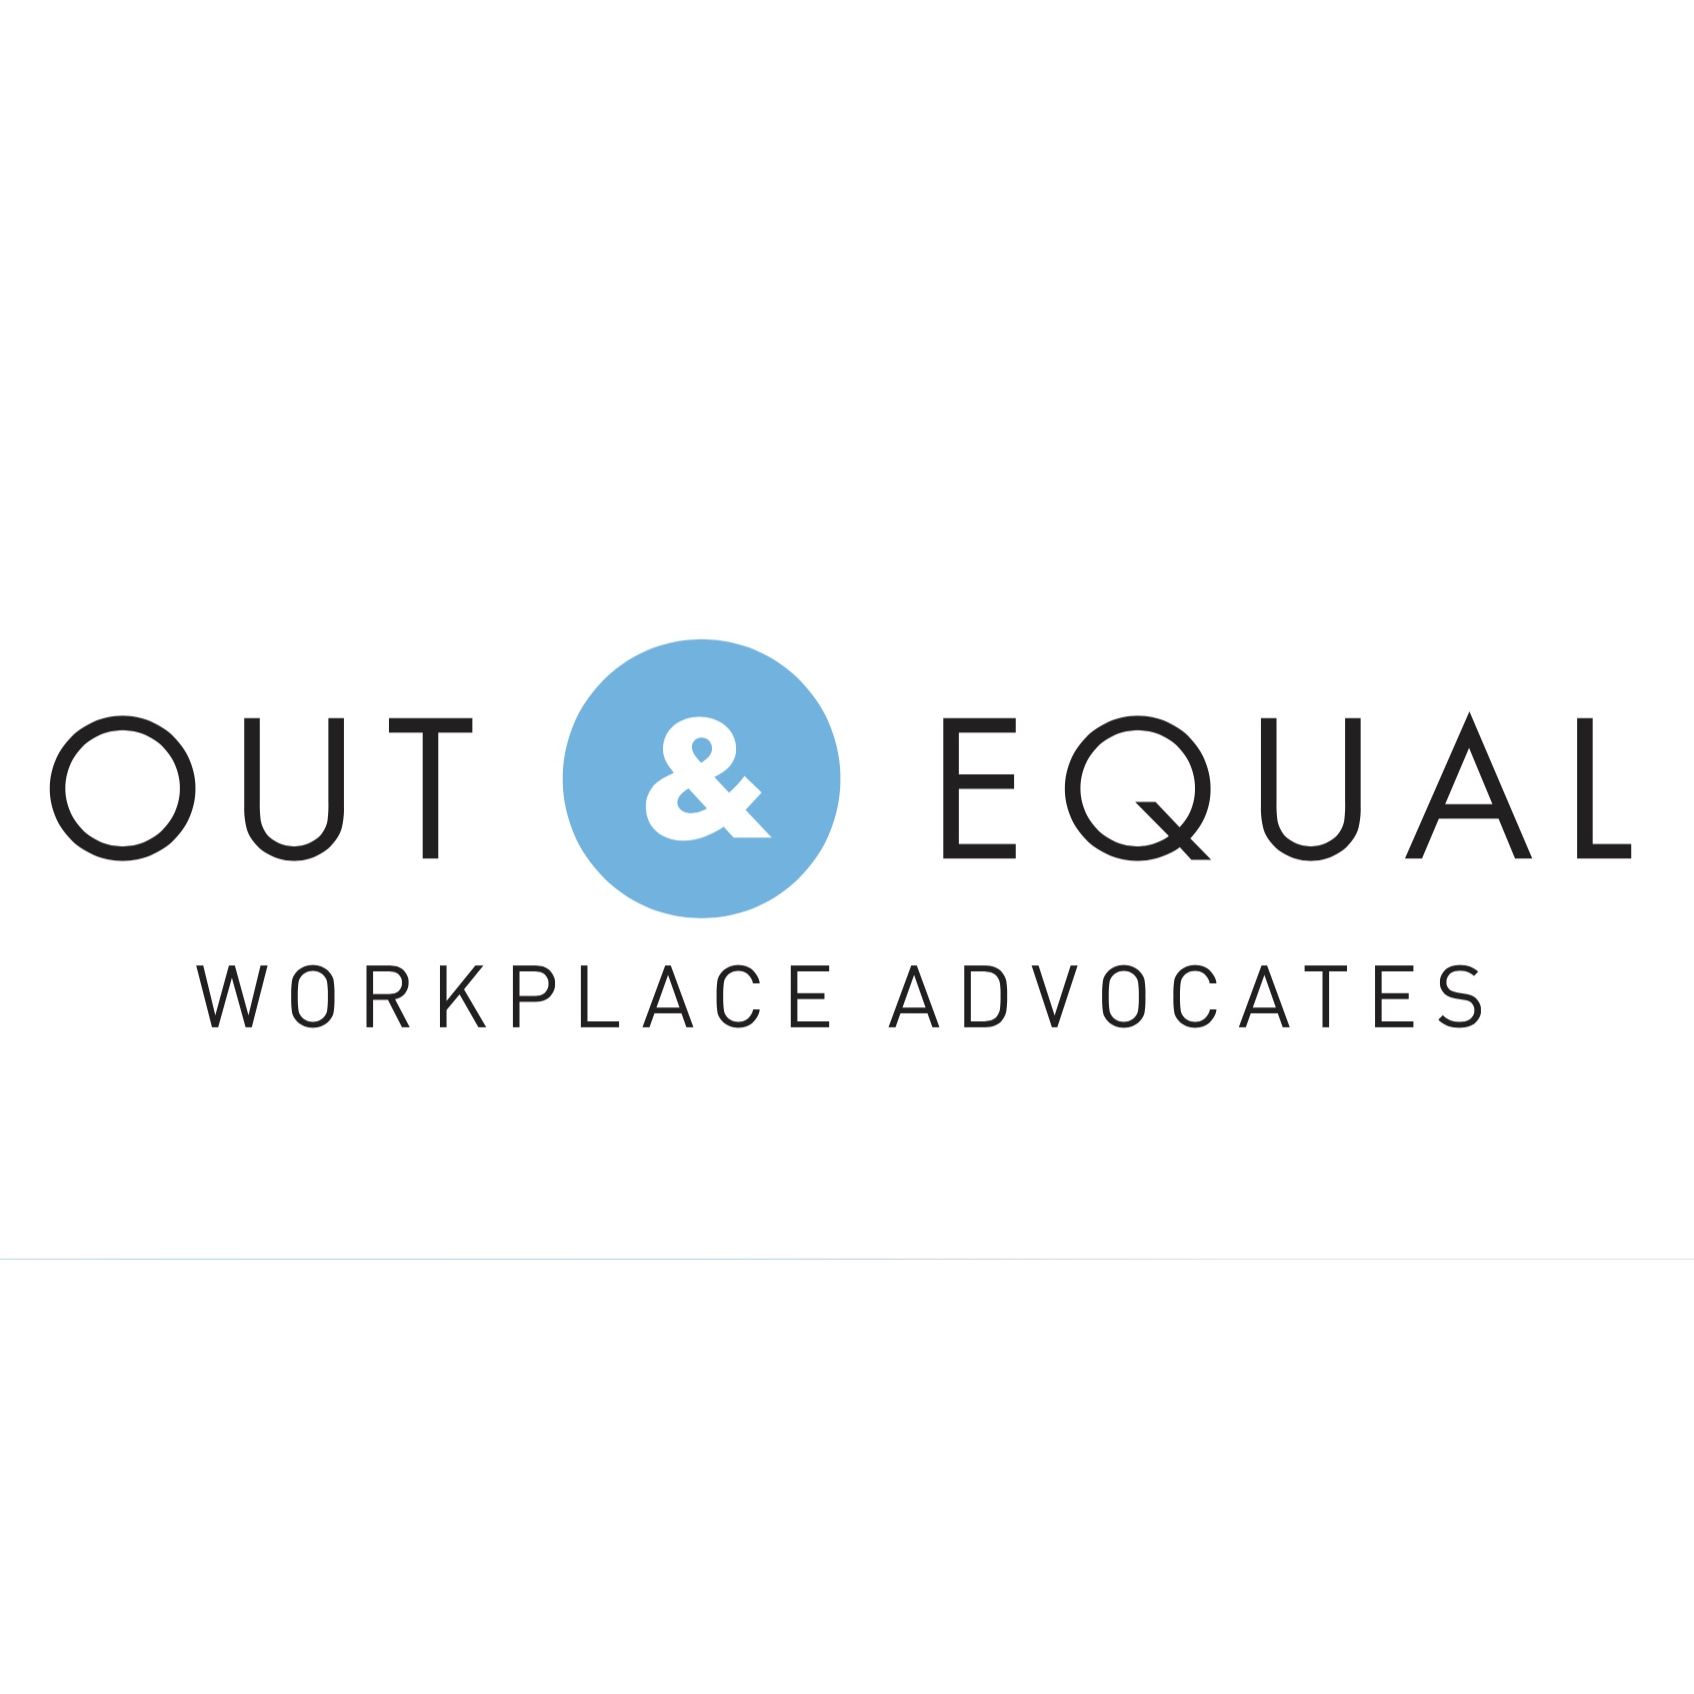 LGBTQ Organization in San Francisco California - Out & Equal